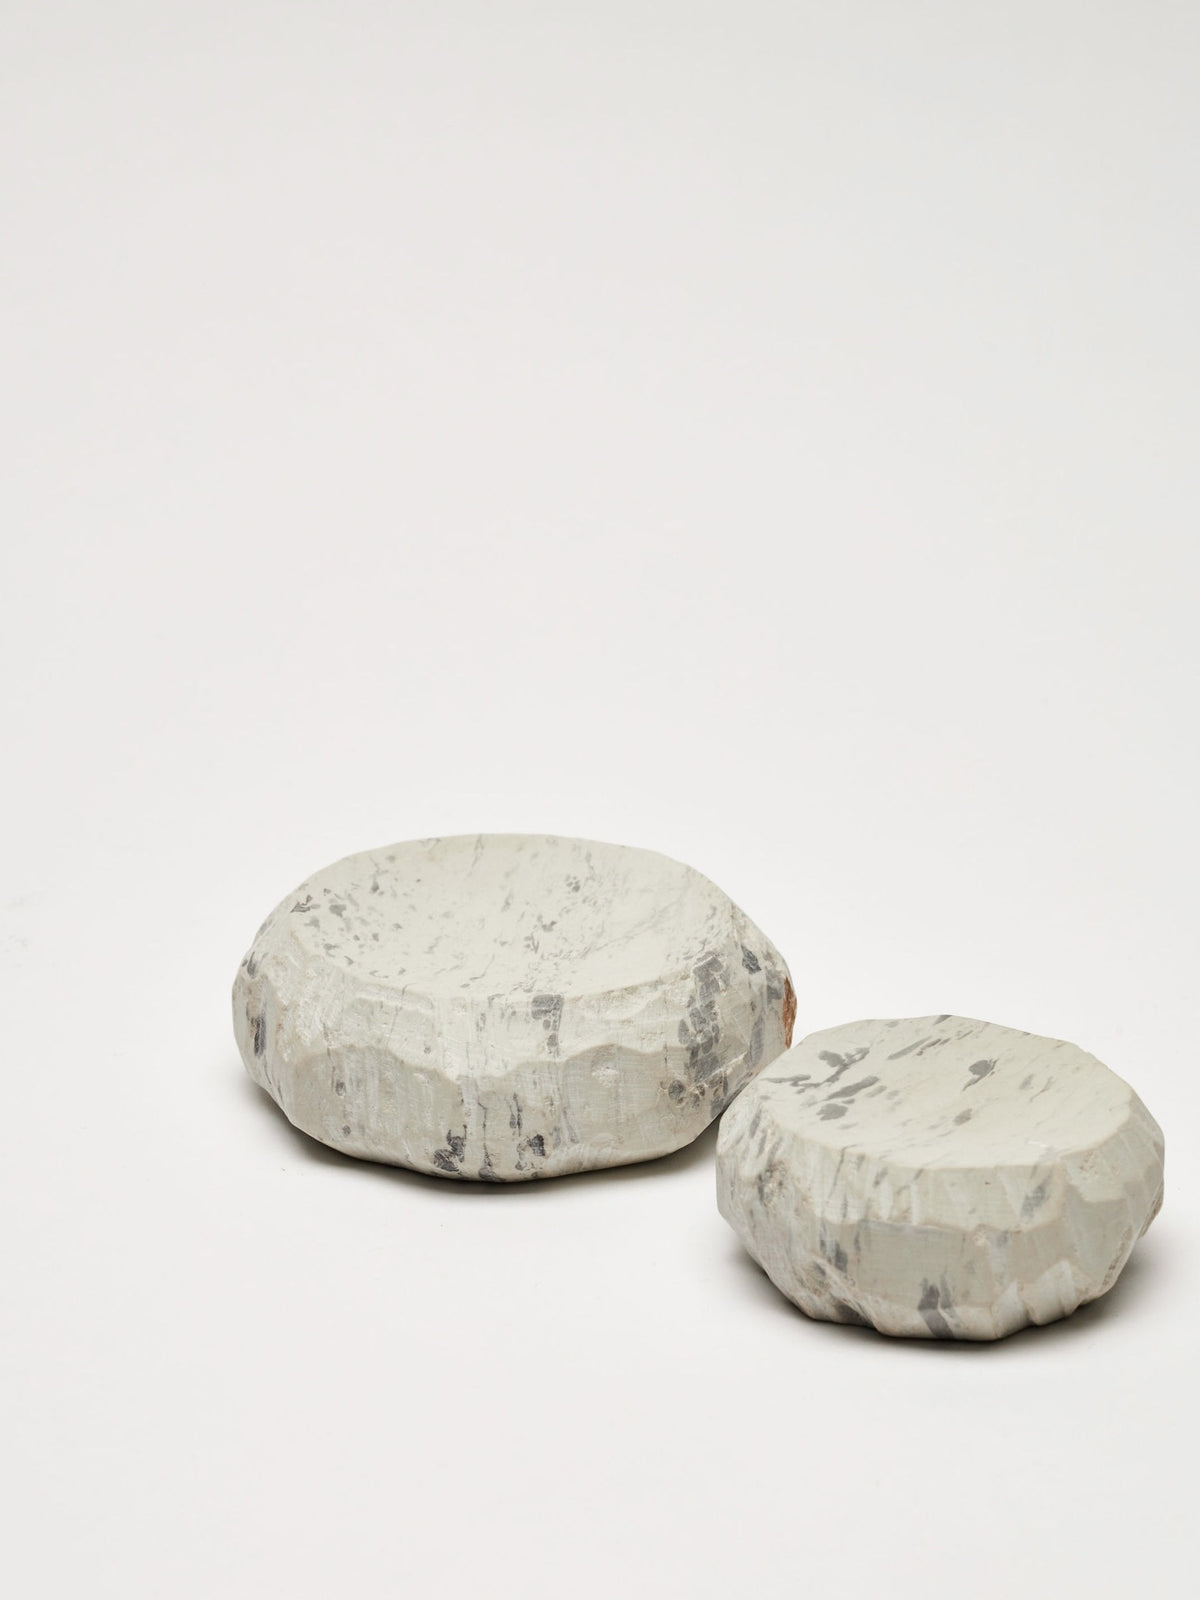 A pair of white and gray Textured Dish Set – Malachite ceramic spheres on a white surface. Brand Name: Asili